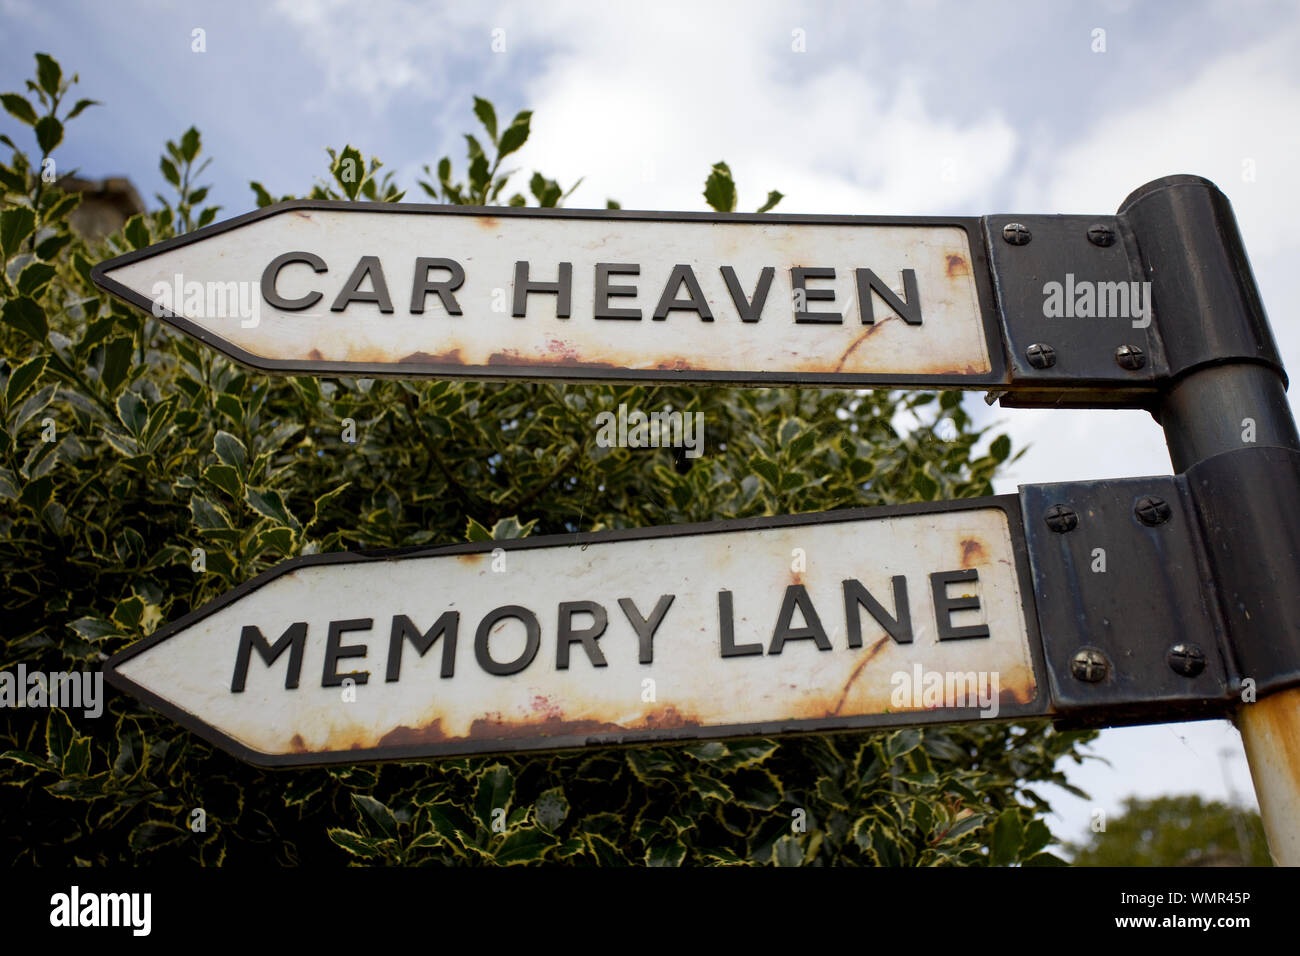 Car Heaven Memory Lane sign Stock Photo